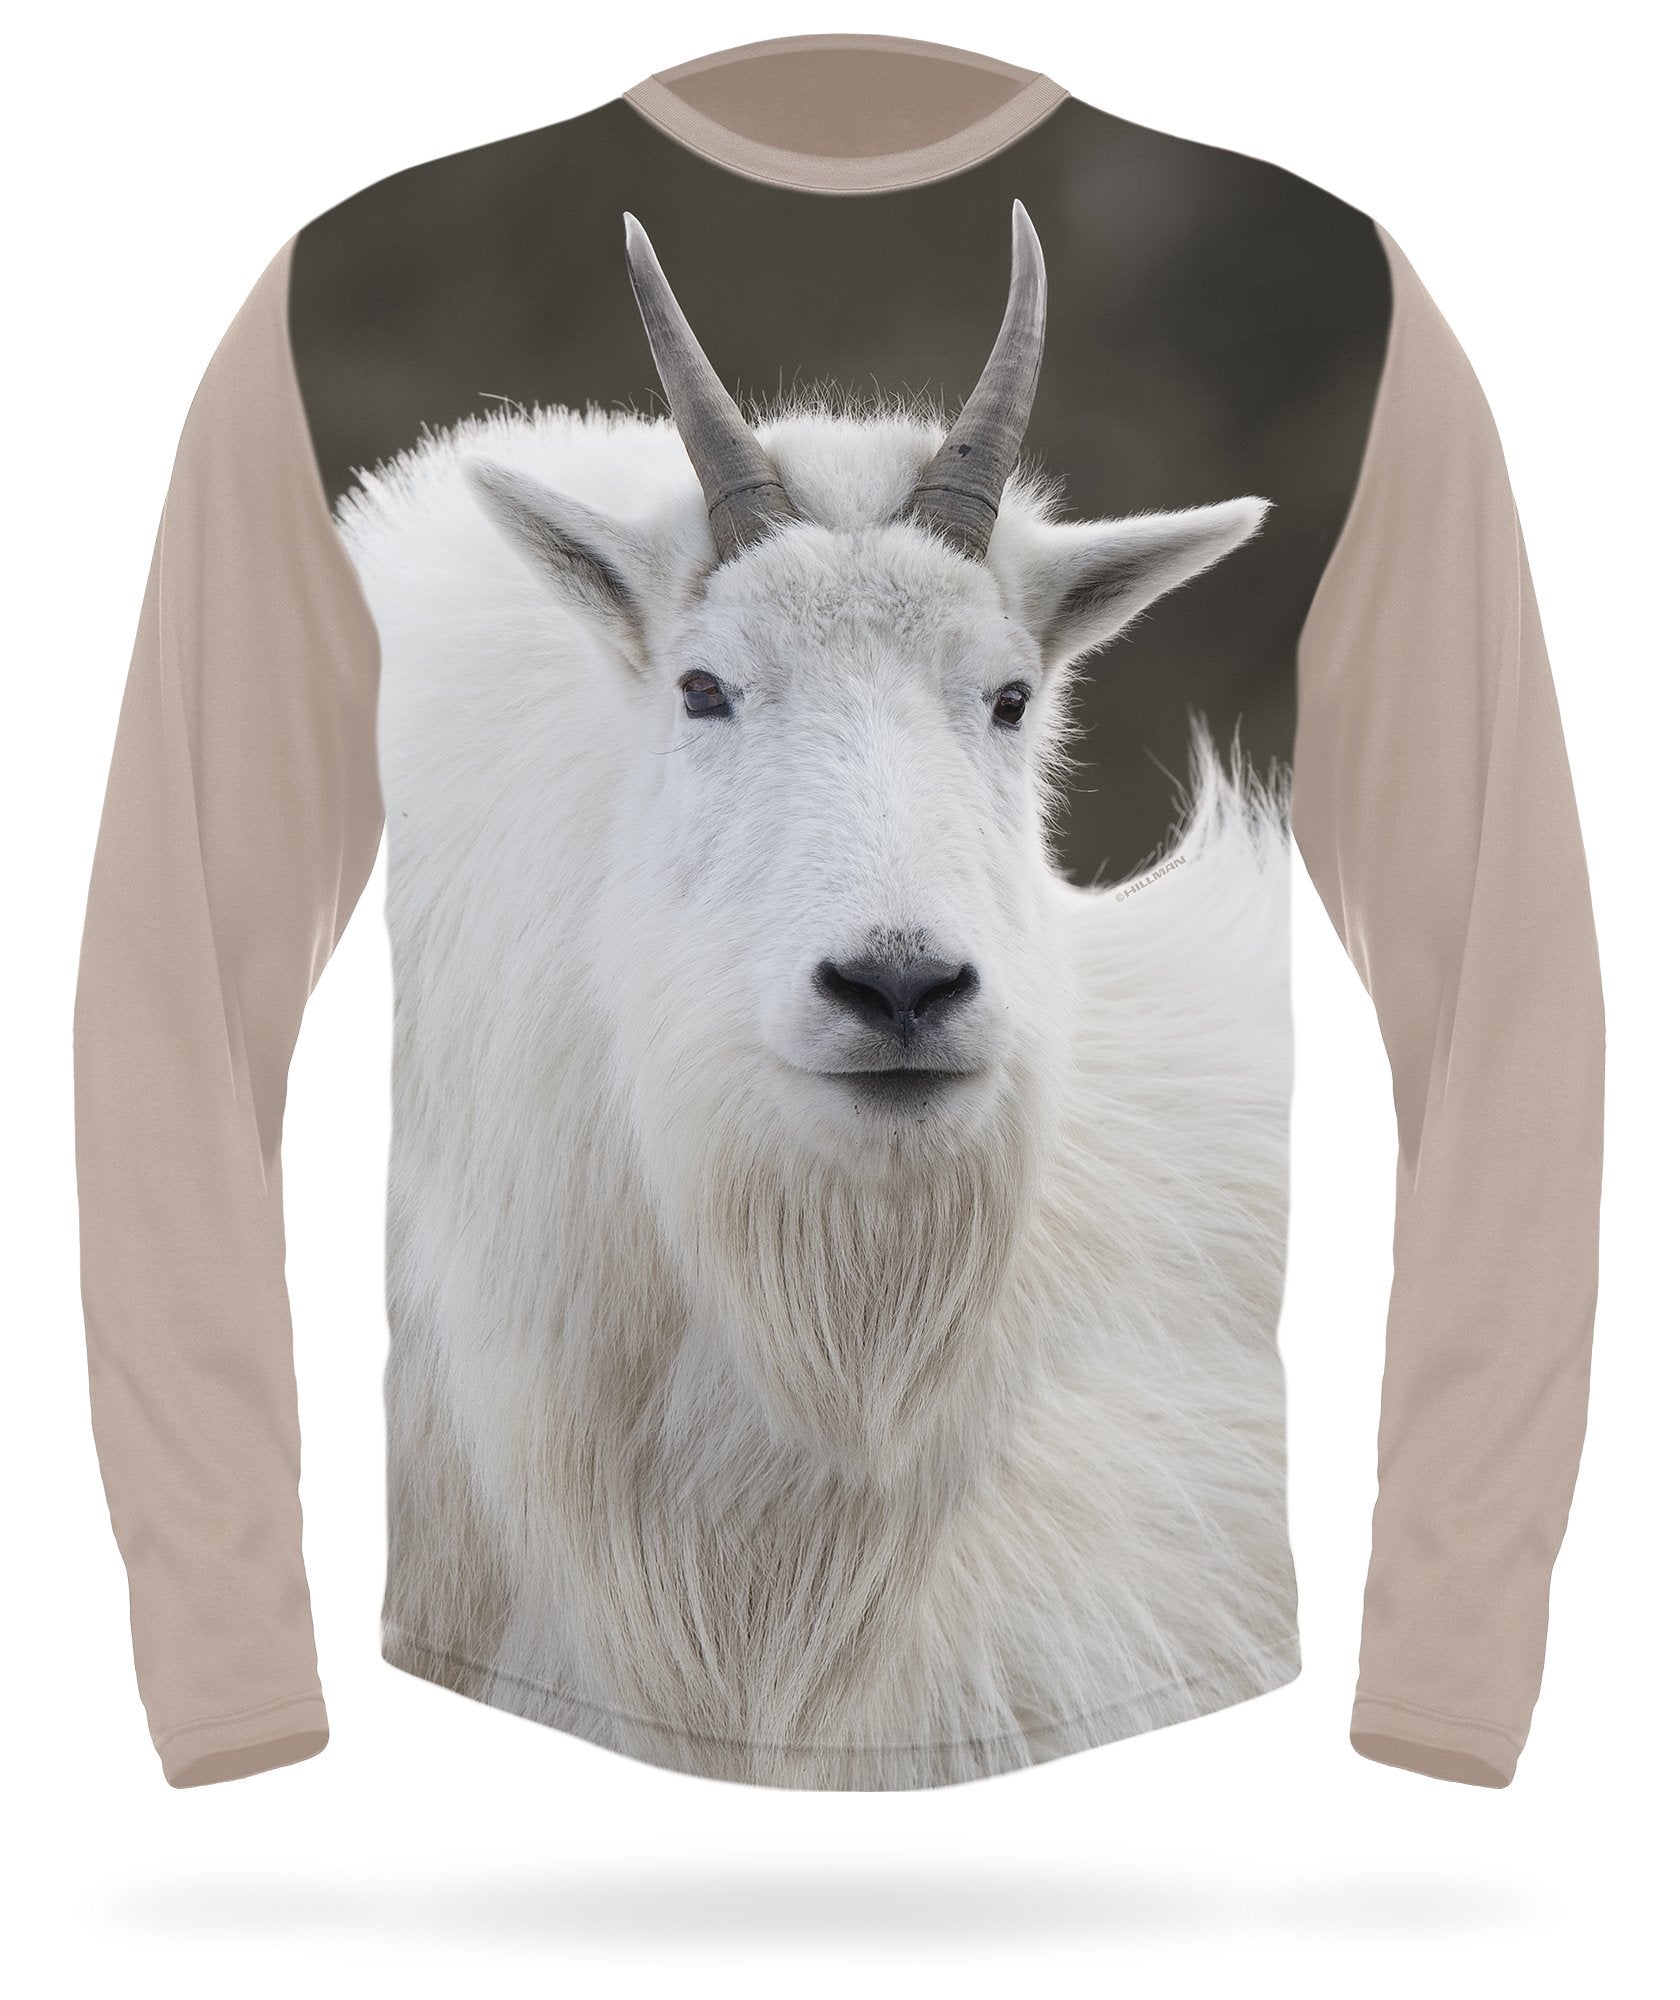 Long sleeve Mountain goat